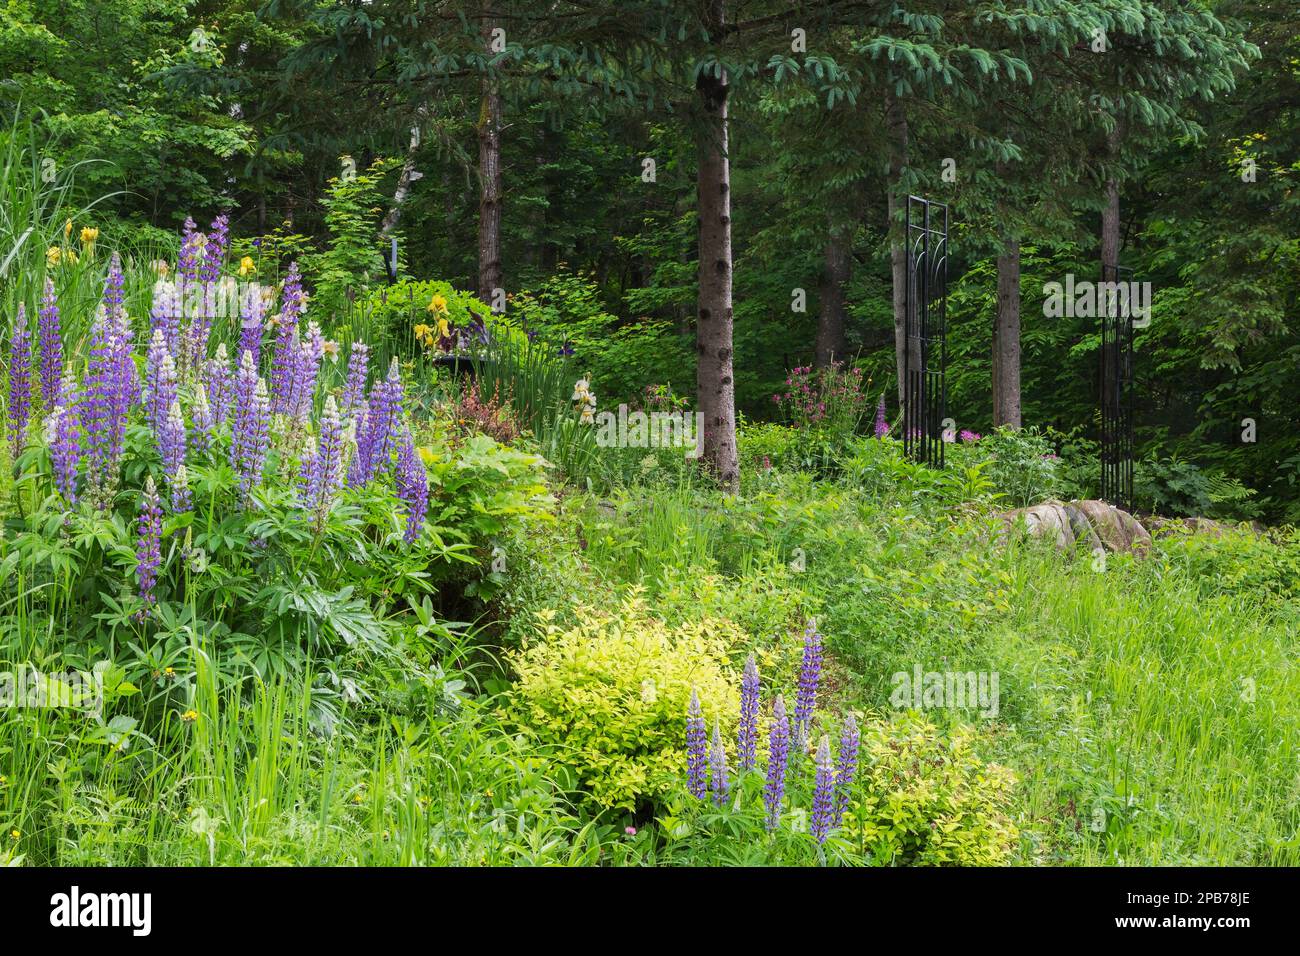 Lupinus perennis 'Perennial Blue' - Wild Lupine, Spiraea japonica - Japanese Spirea, Picea glauca - White Spruce in border in front yard garden. Stock Photo